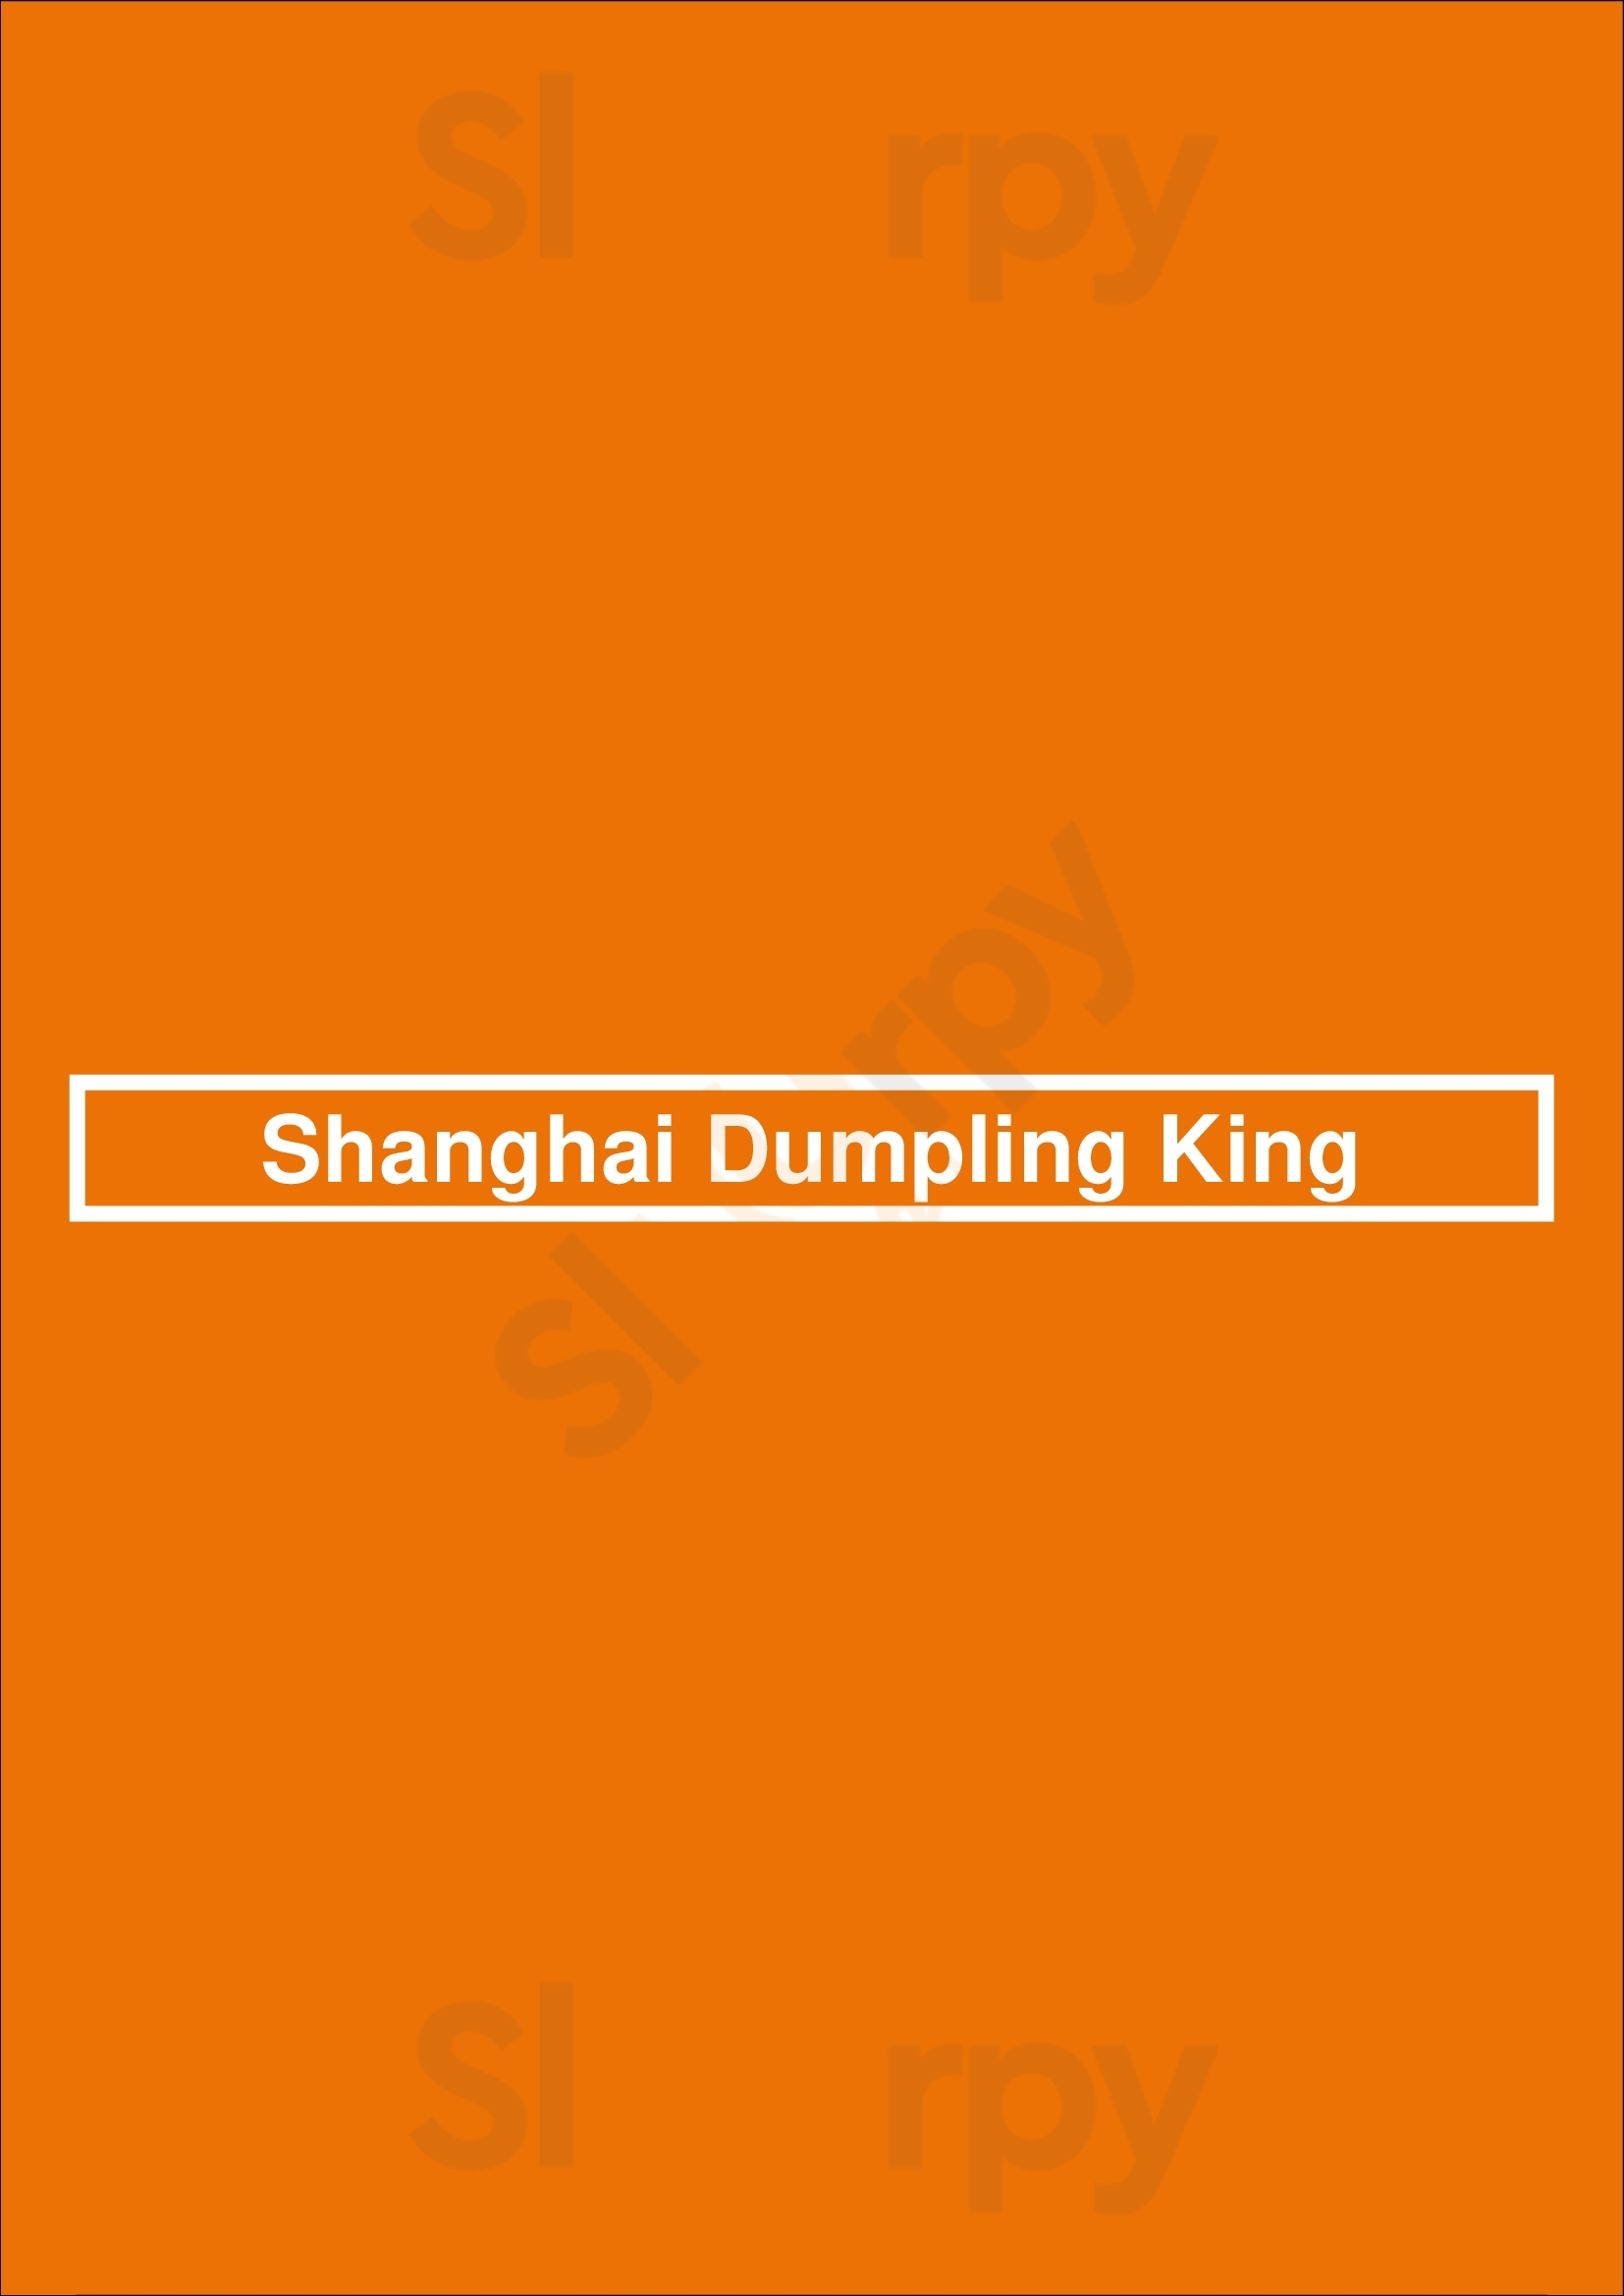 Shanghai Dumpling King San Francisco Menu - 1